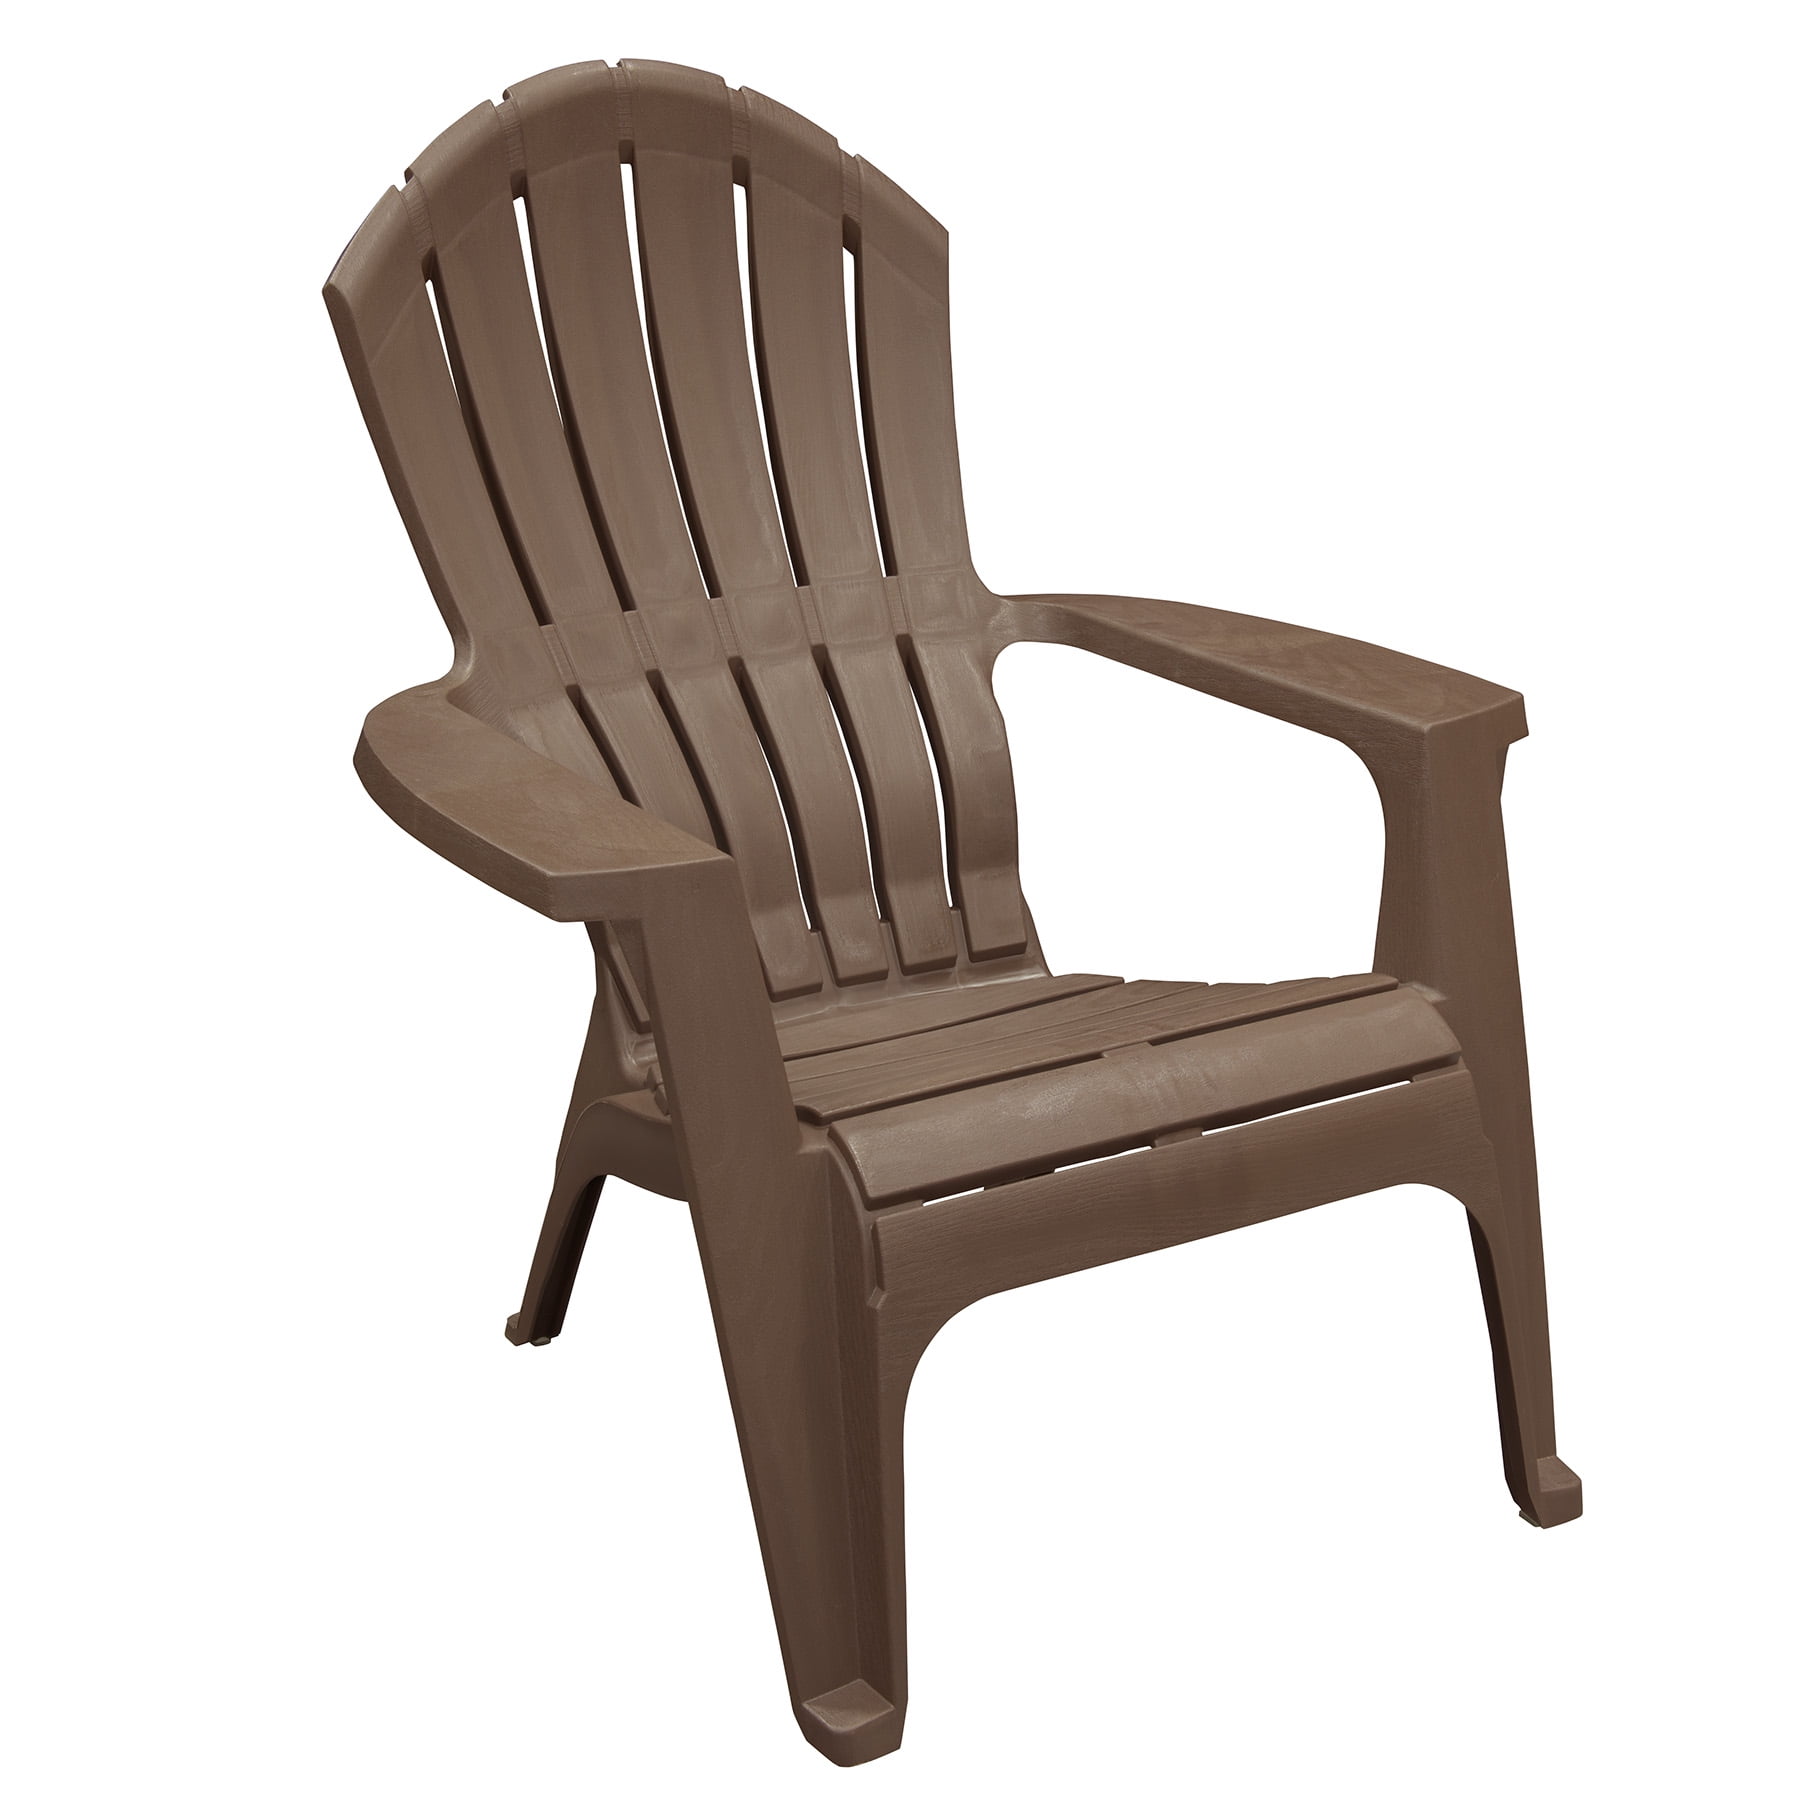 Adams Adirondack Real Comfort Plastic Chair Earth Brown Walmart com 